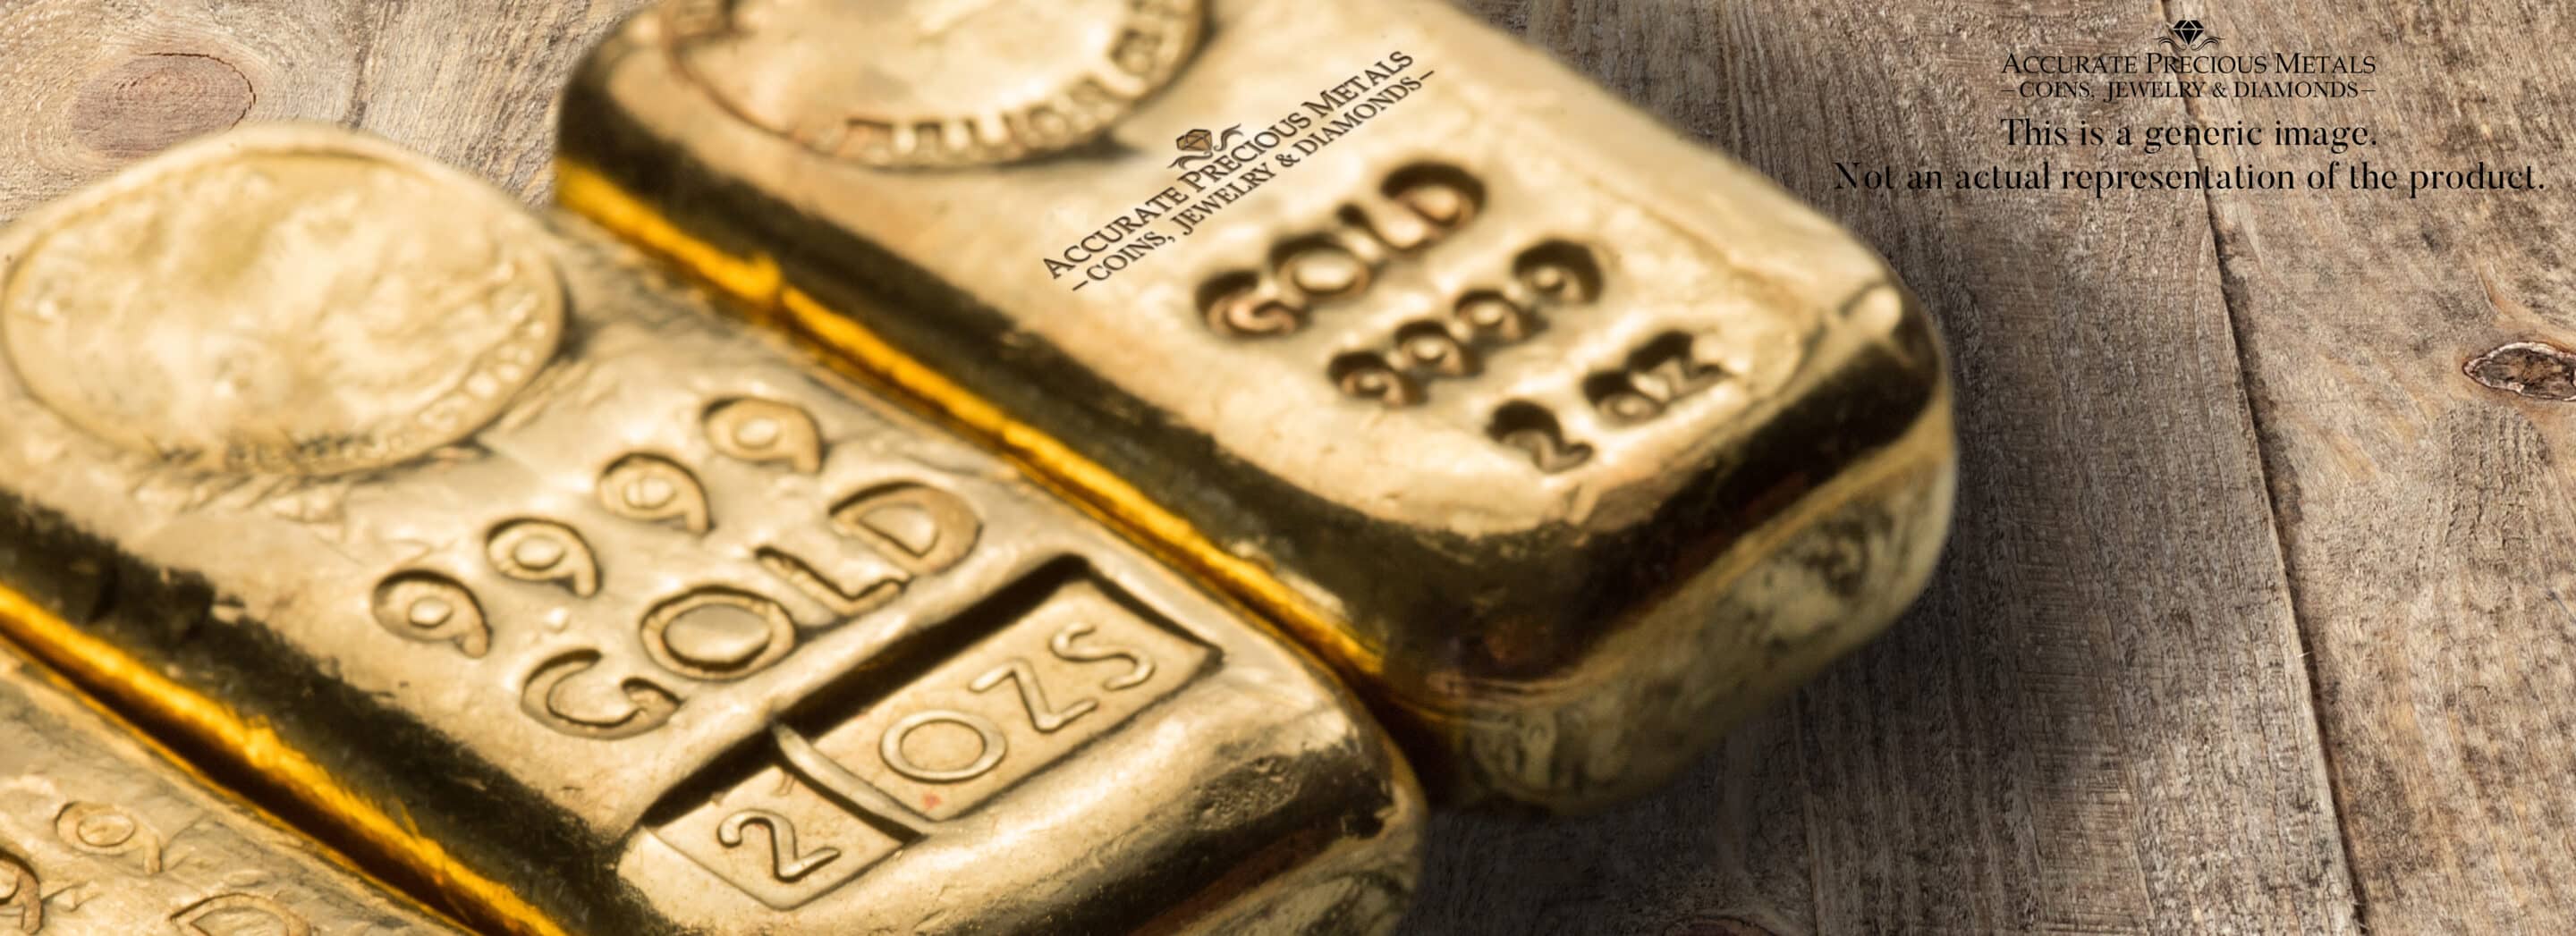 Shining RMC 50g Gold Bar - Premium Investment Choice